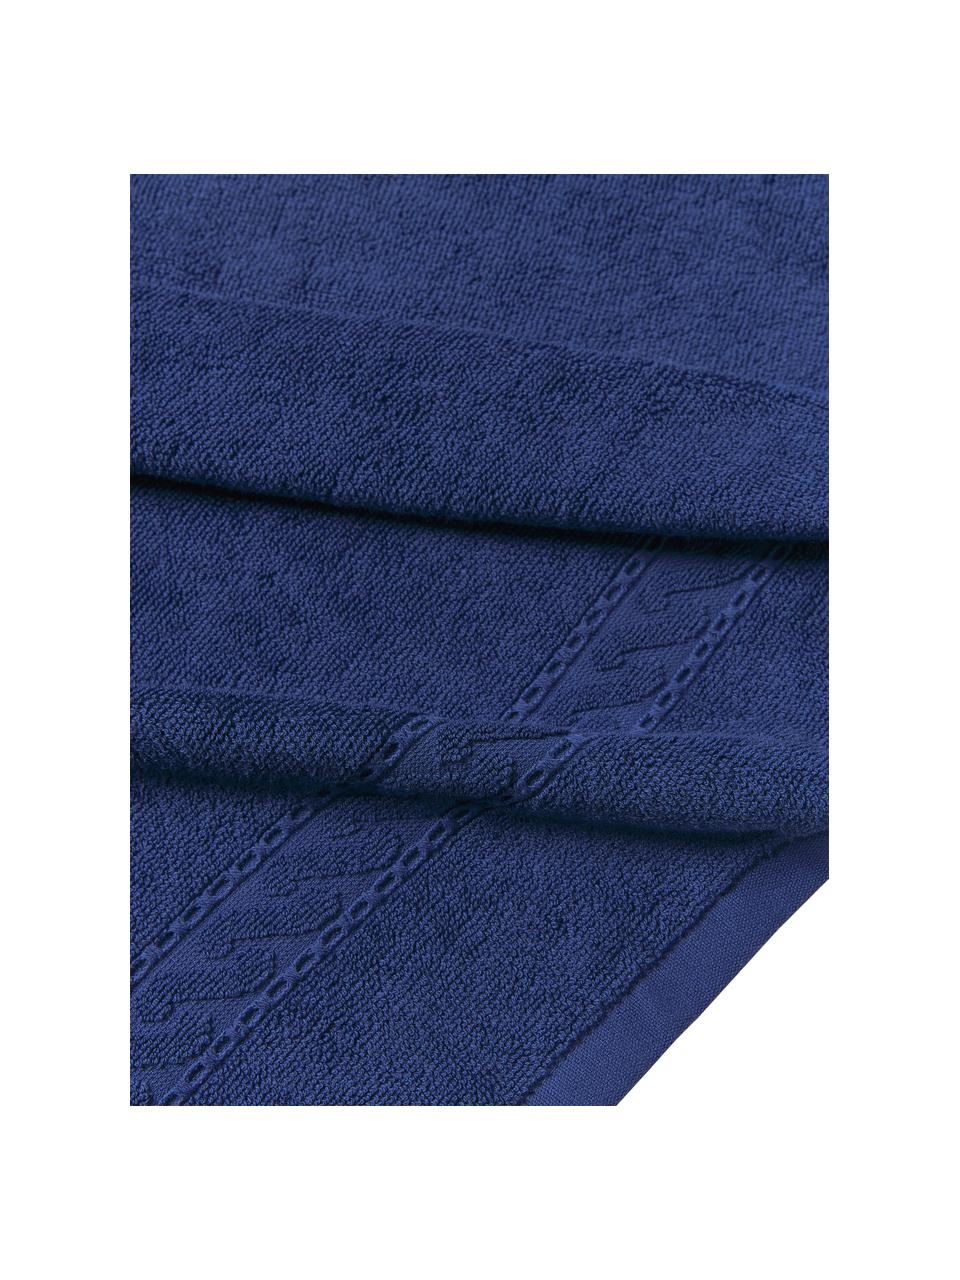 Asciugamano Cordelia, Blu scuro, Asciugamano per ospiti, Larg. 30 x Lung. 50 cm, 2 pz